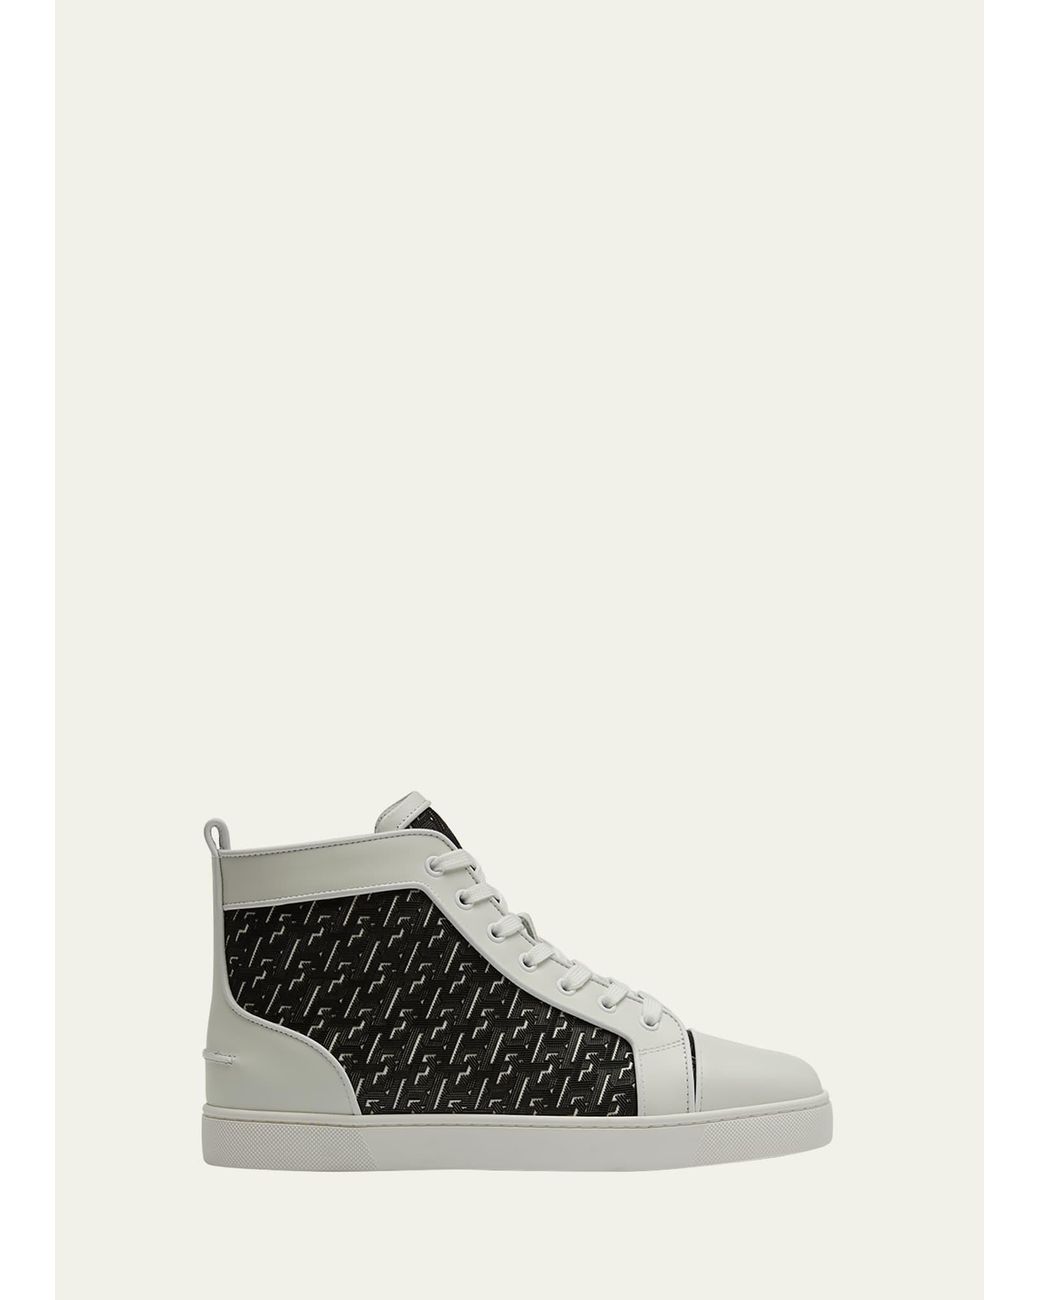 Louis Vuitton High-Top Monogram Sneakers